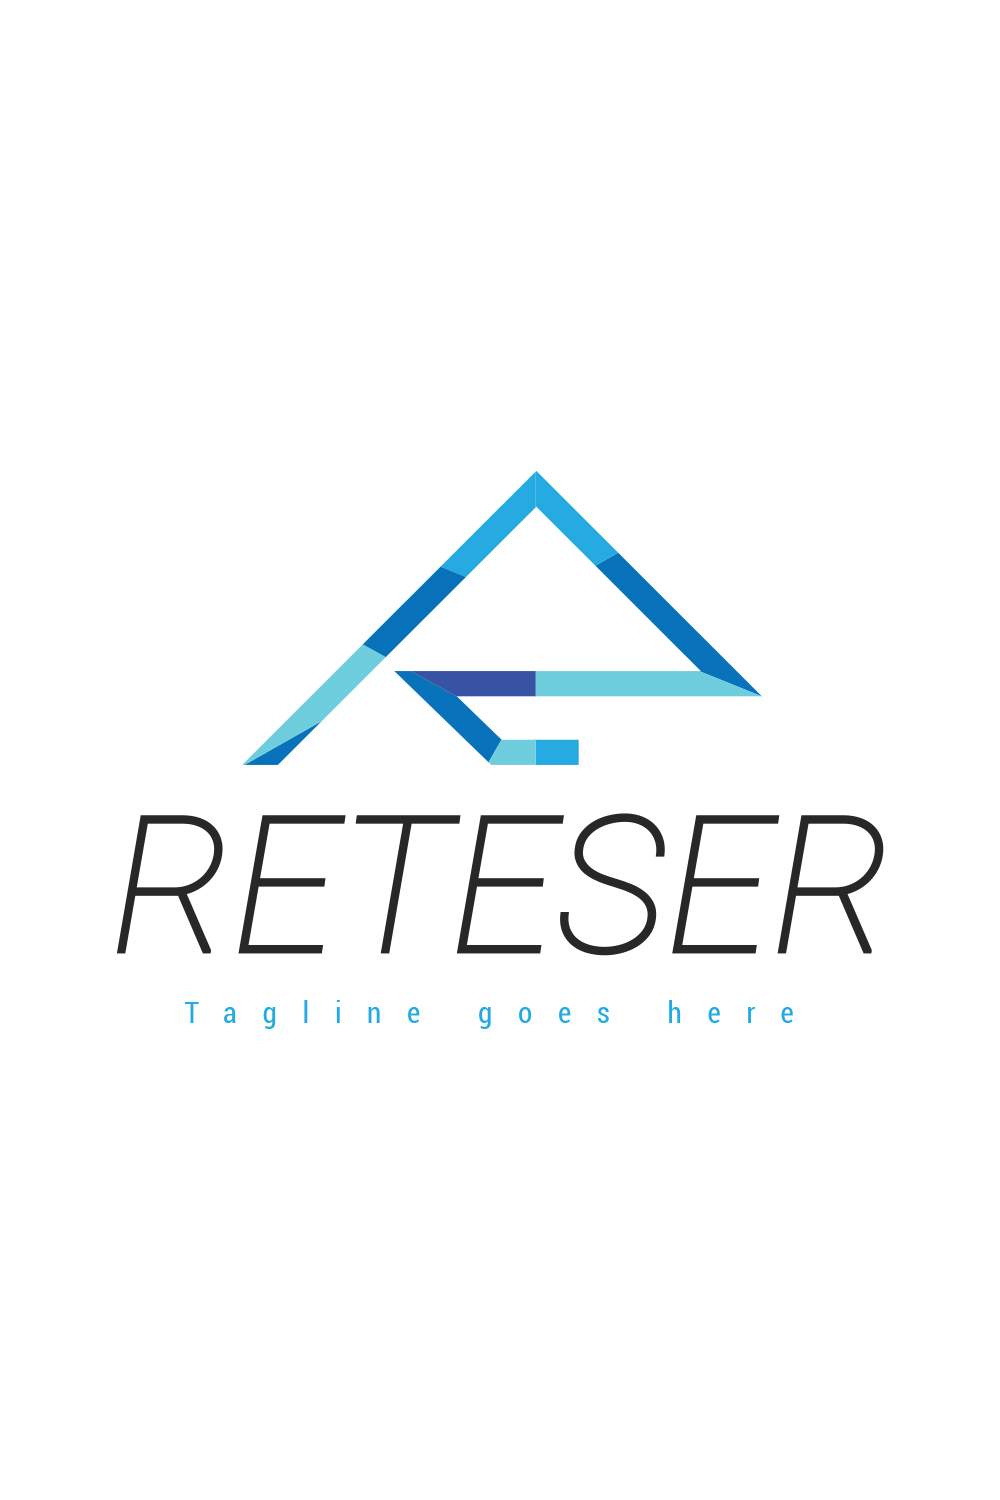 Letter R geometrical logo design pinterest preview image.